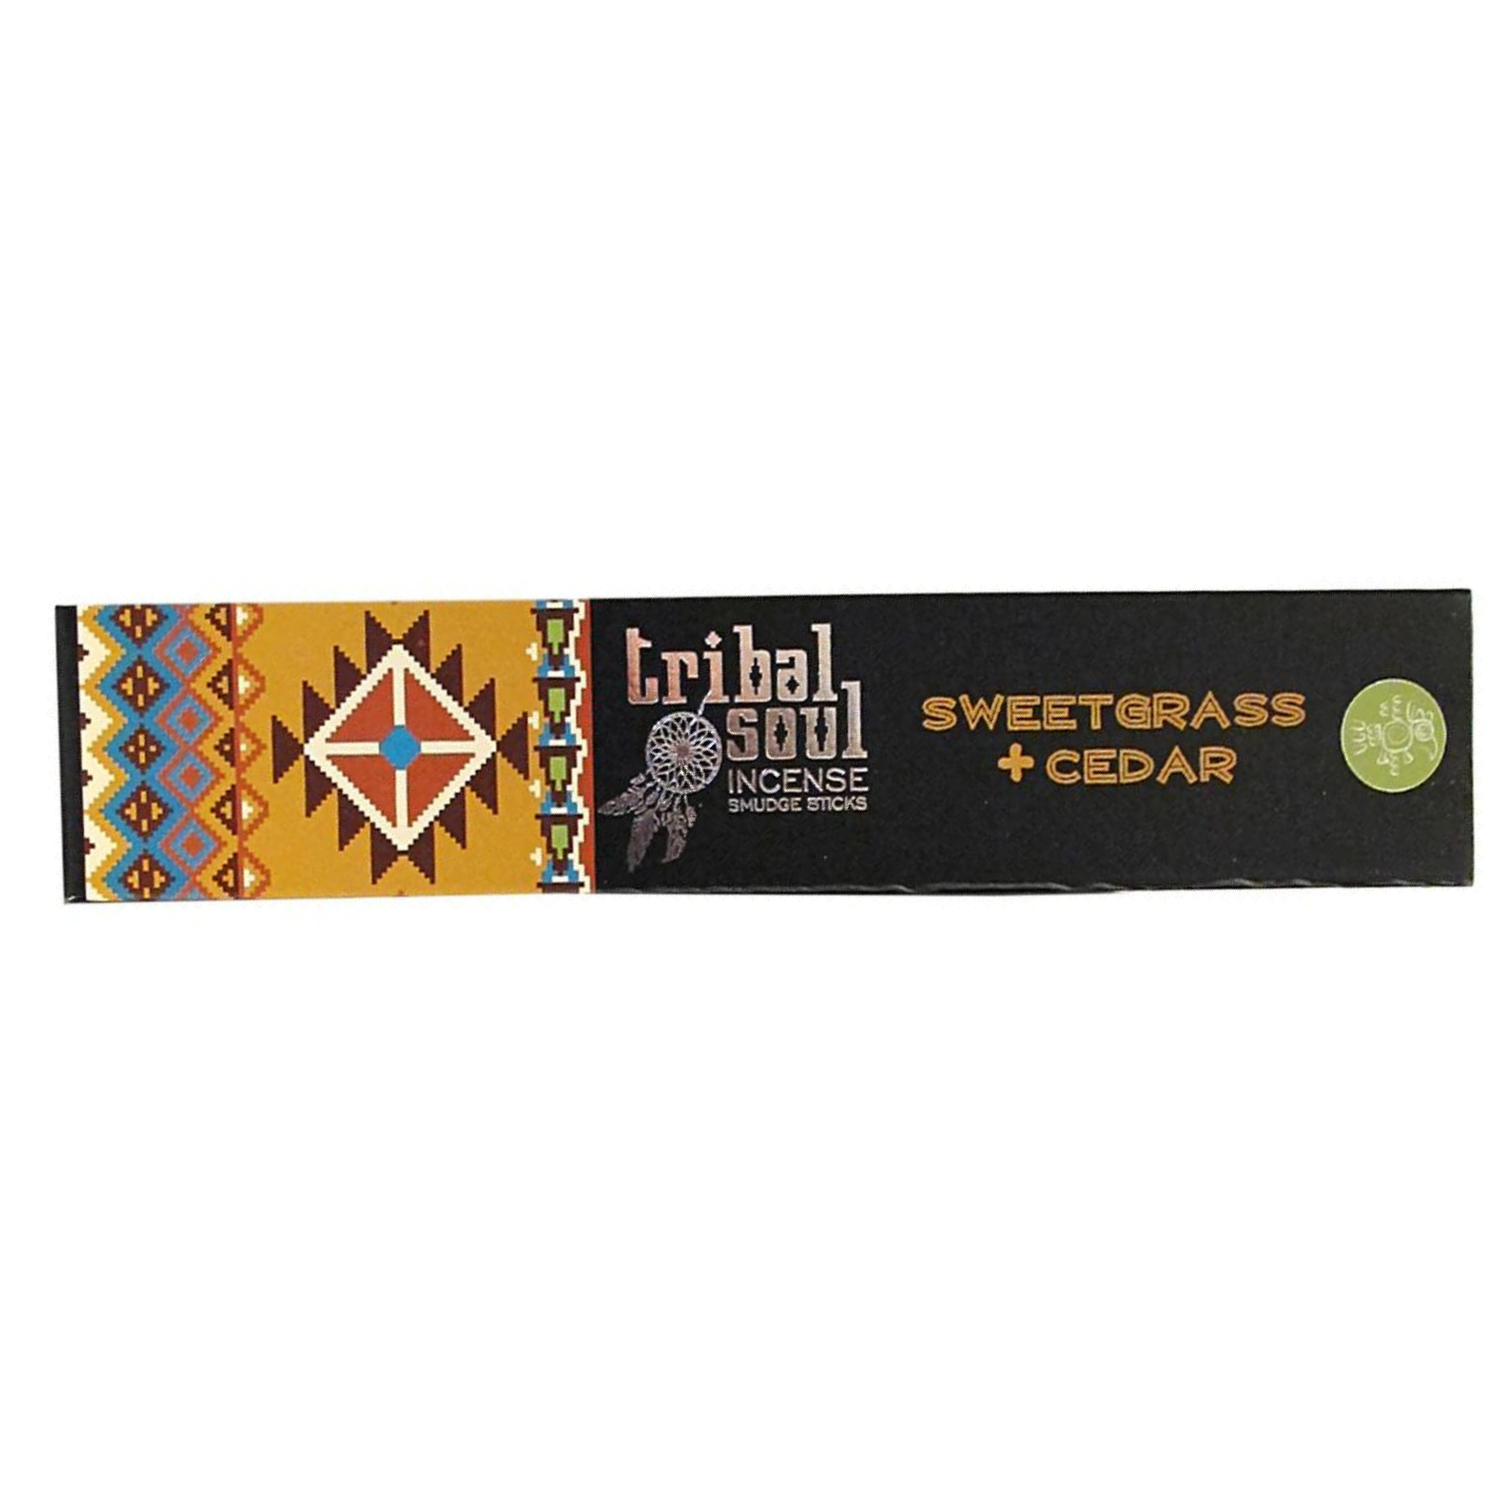 Tribal Soul Incense Sticks ( 1 Box-12 packs of 15g each ) or (1 Packet-15g)